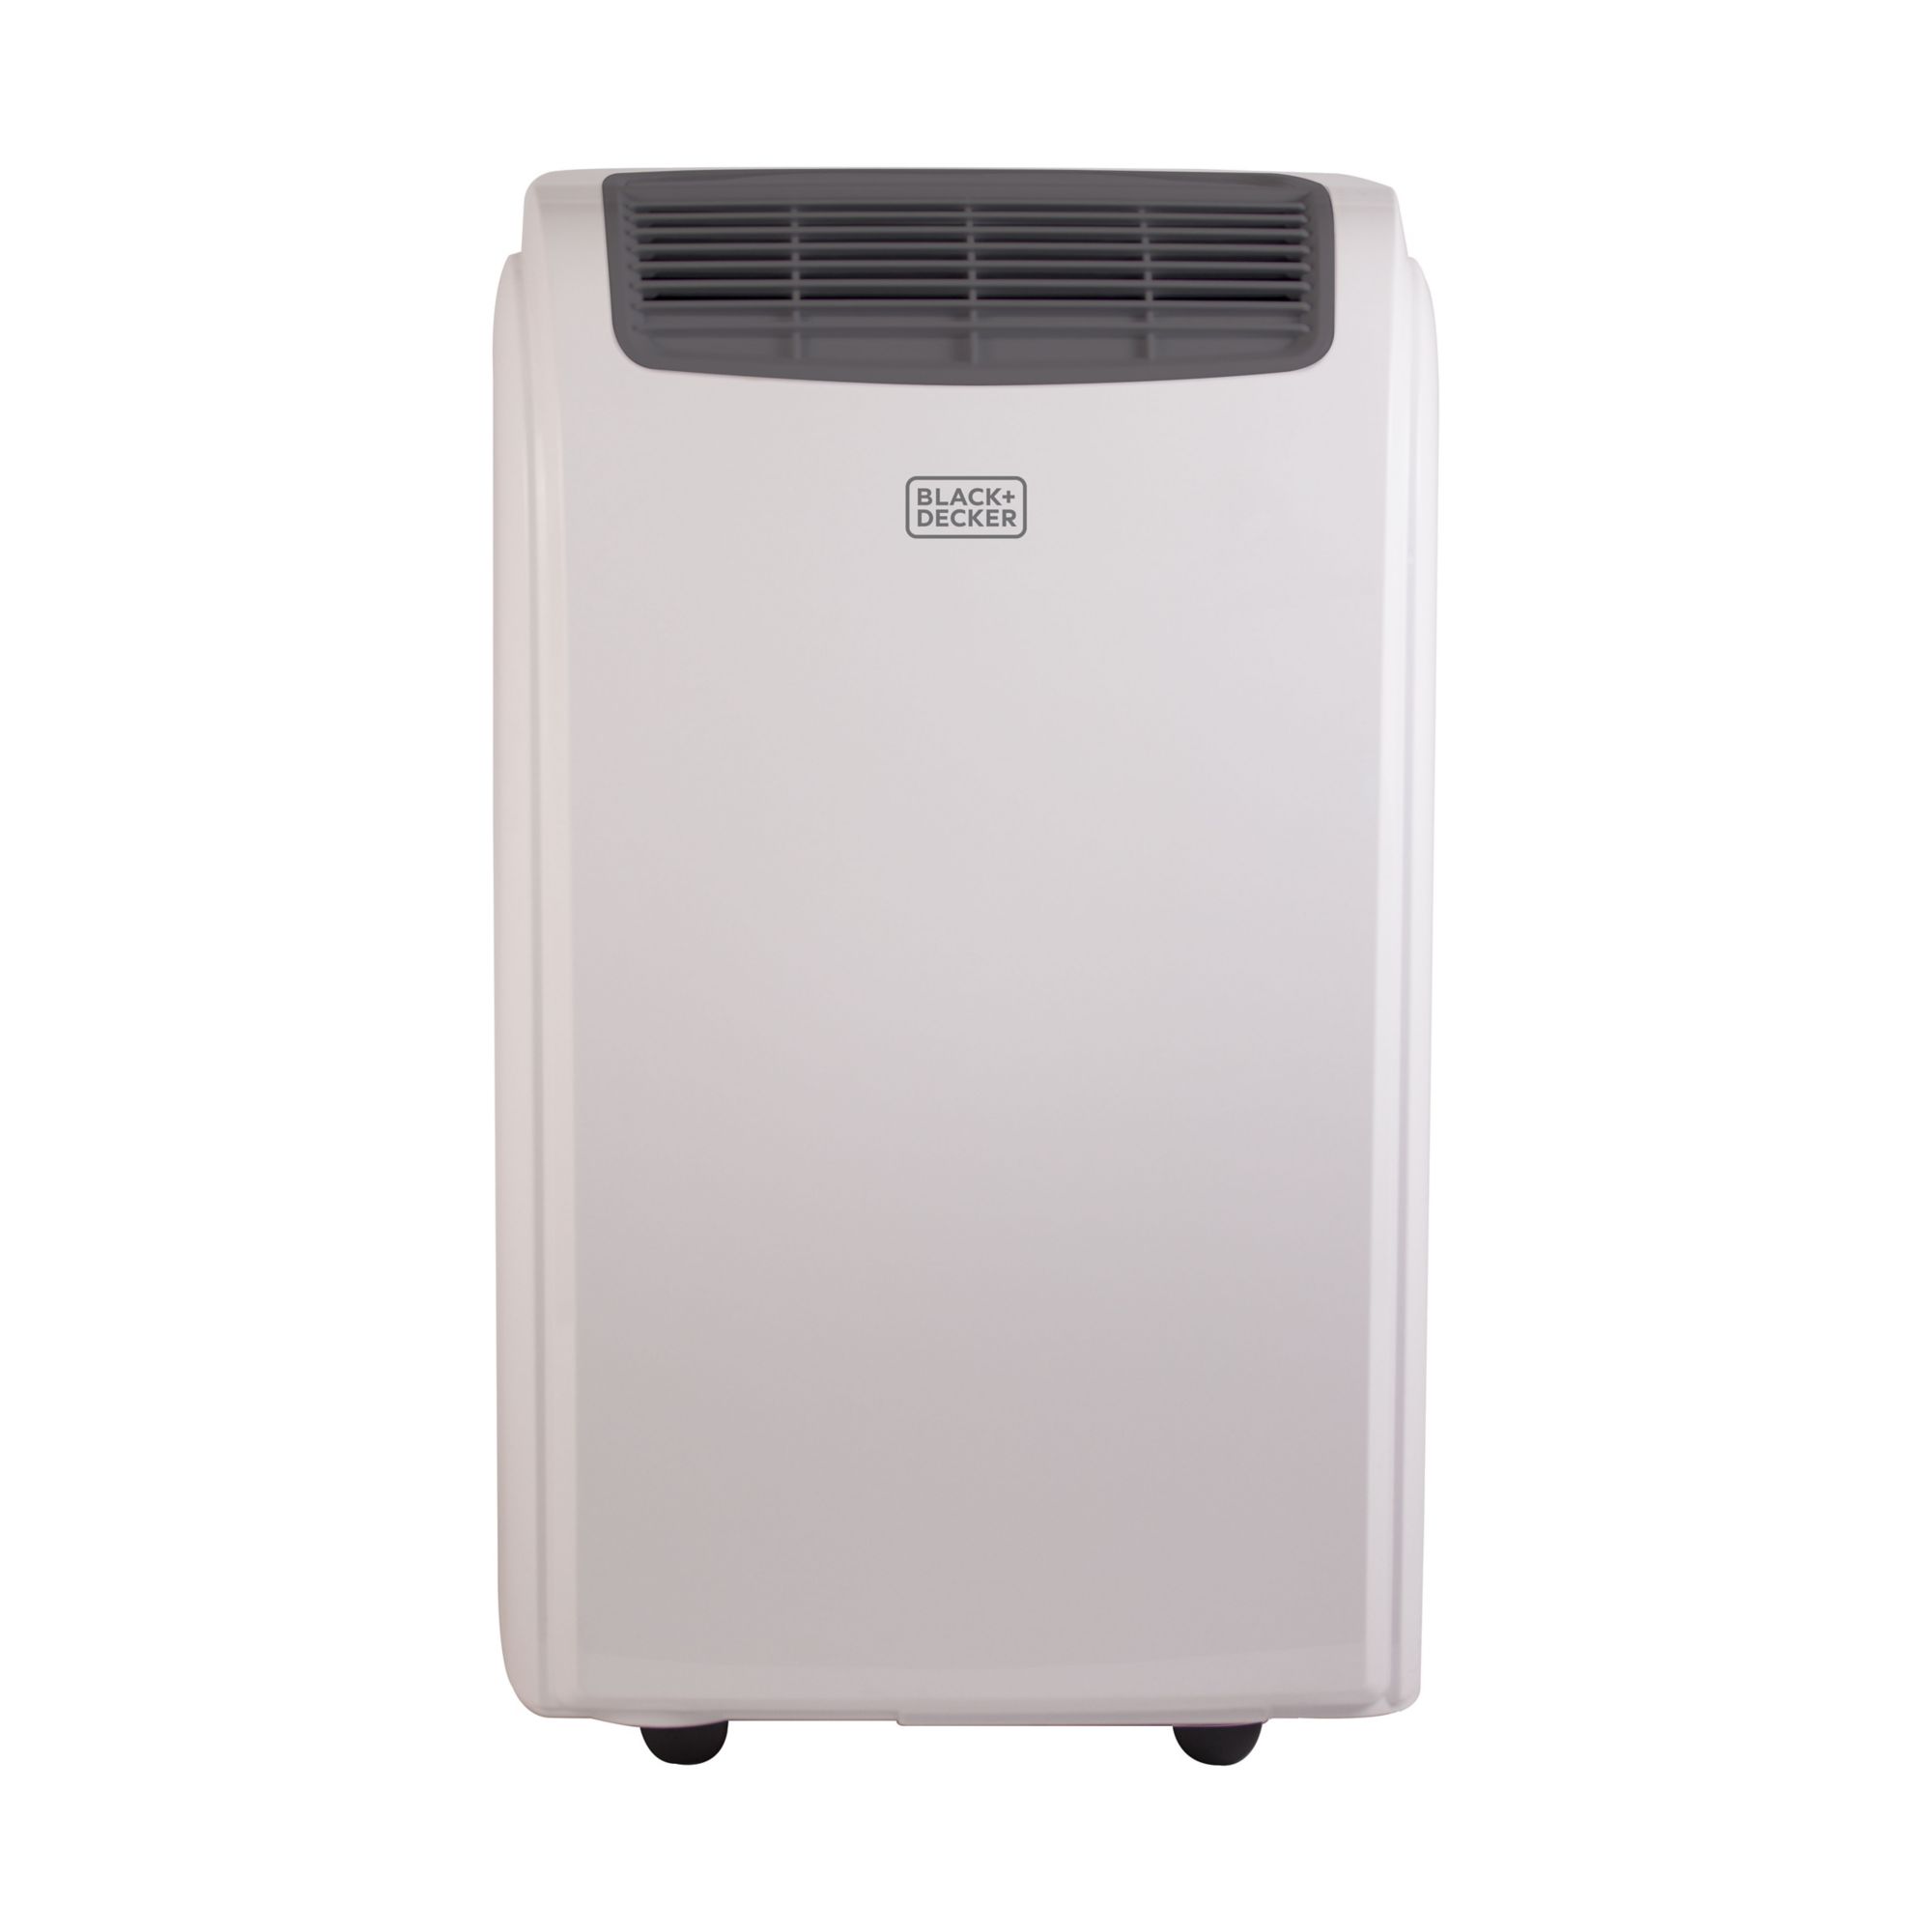 BLACK+DECKER 14,000 BTU Portable Air Conditioner with Remote Control, White  